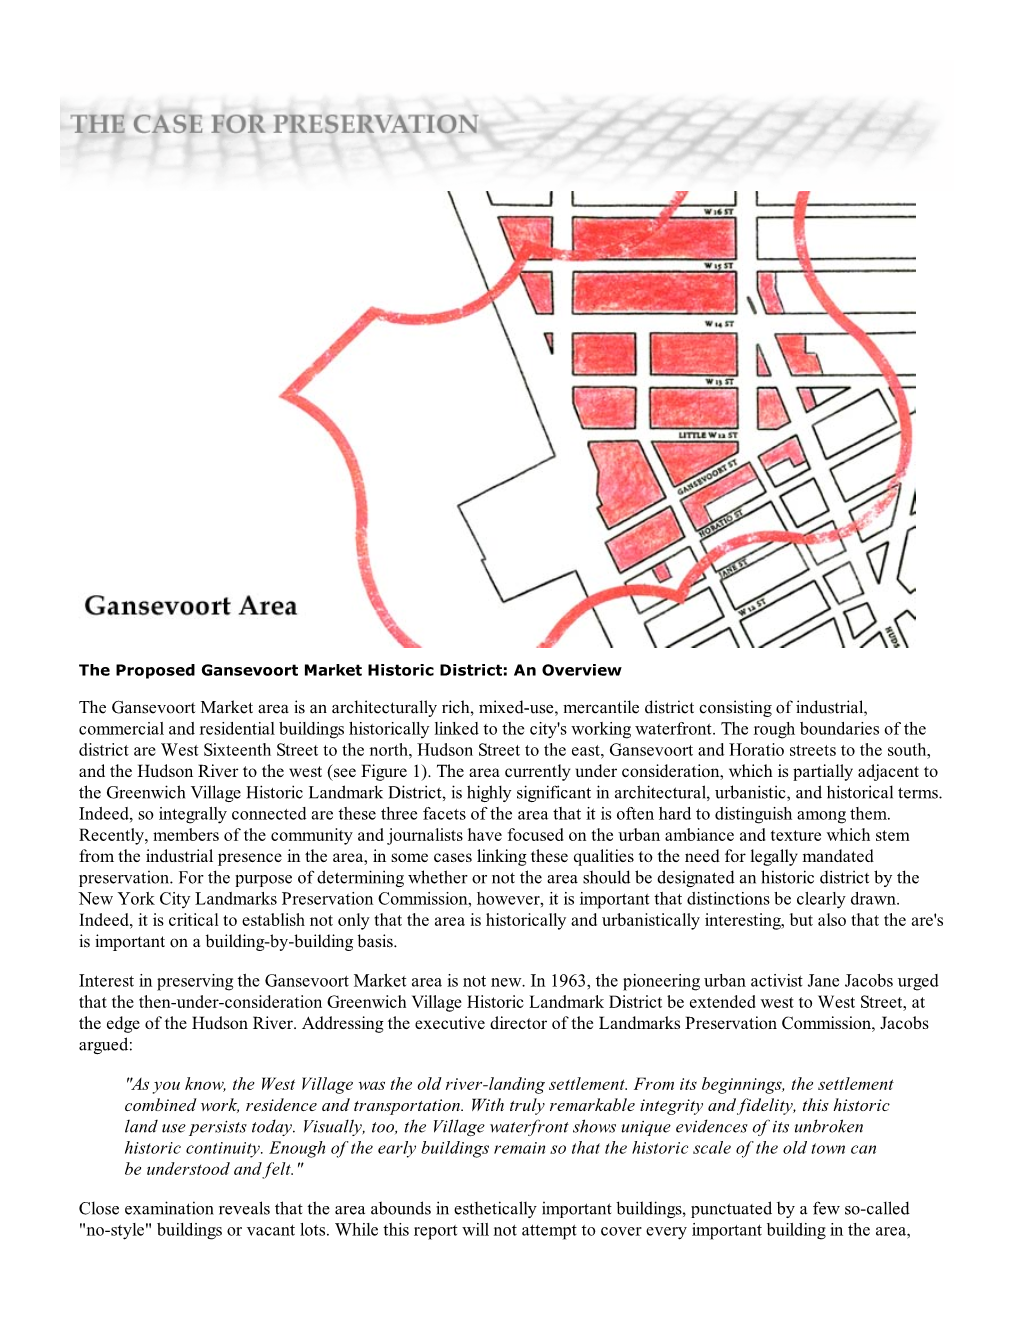 Gansevoort Market Historic District: an Overview